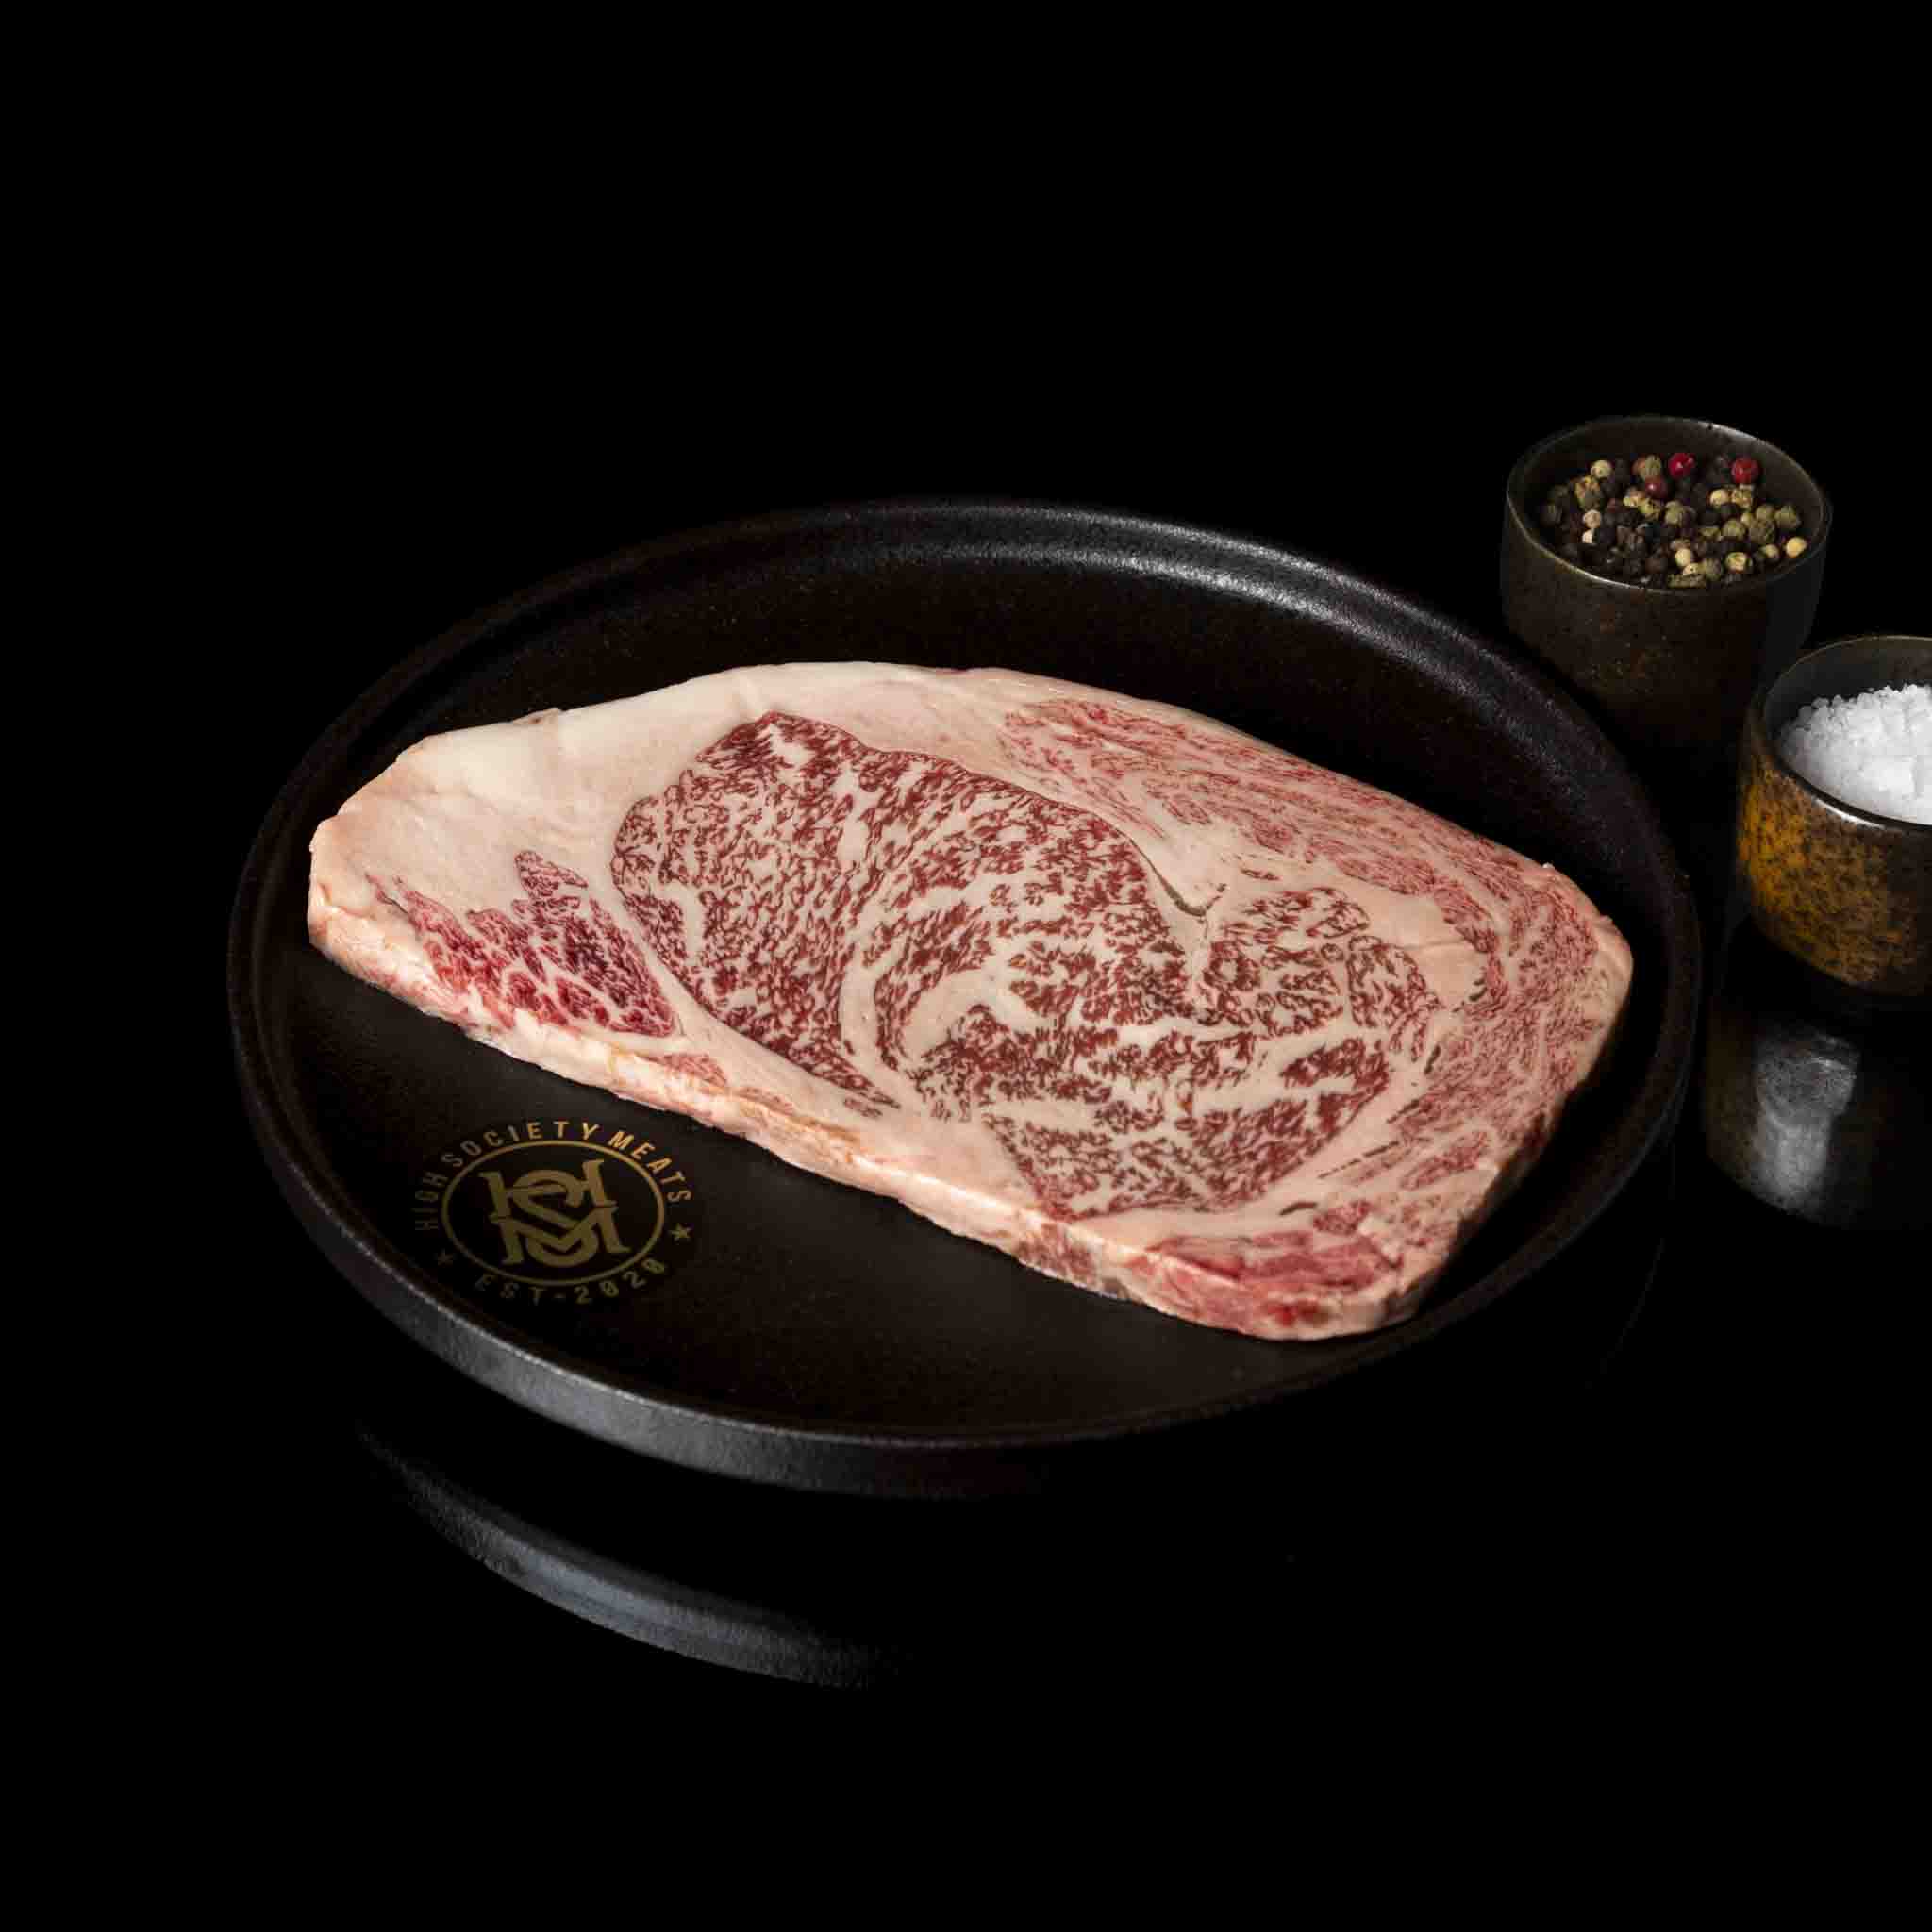 Japanese A5 Wagyu | Kyoto | Ribeye Steak | BMS 10-11 | 12 oz